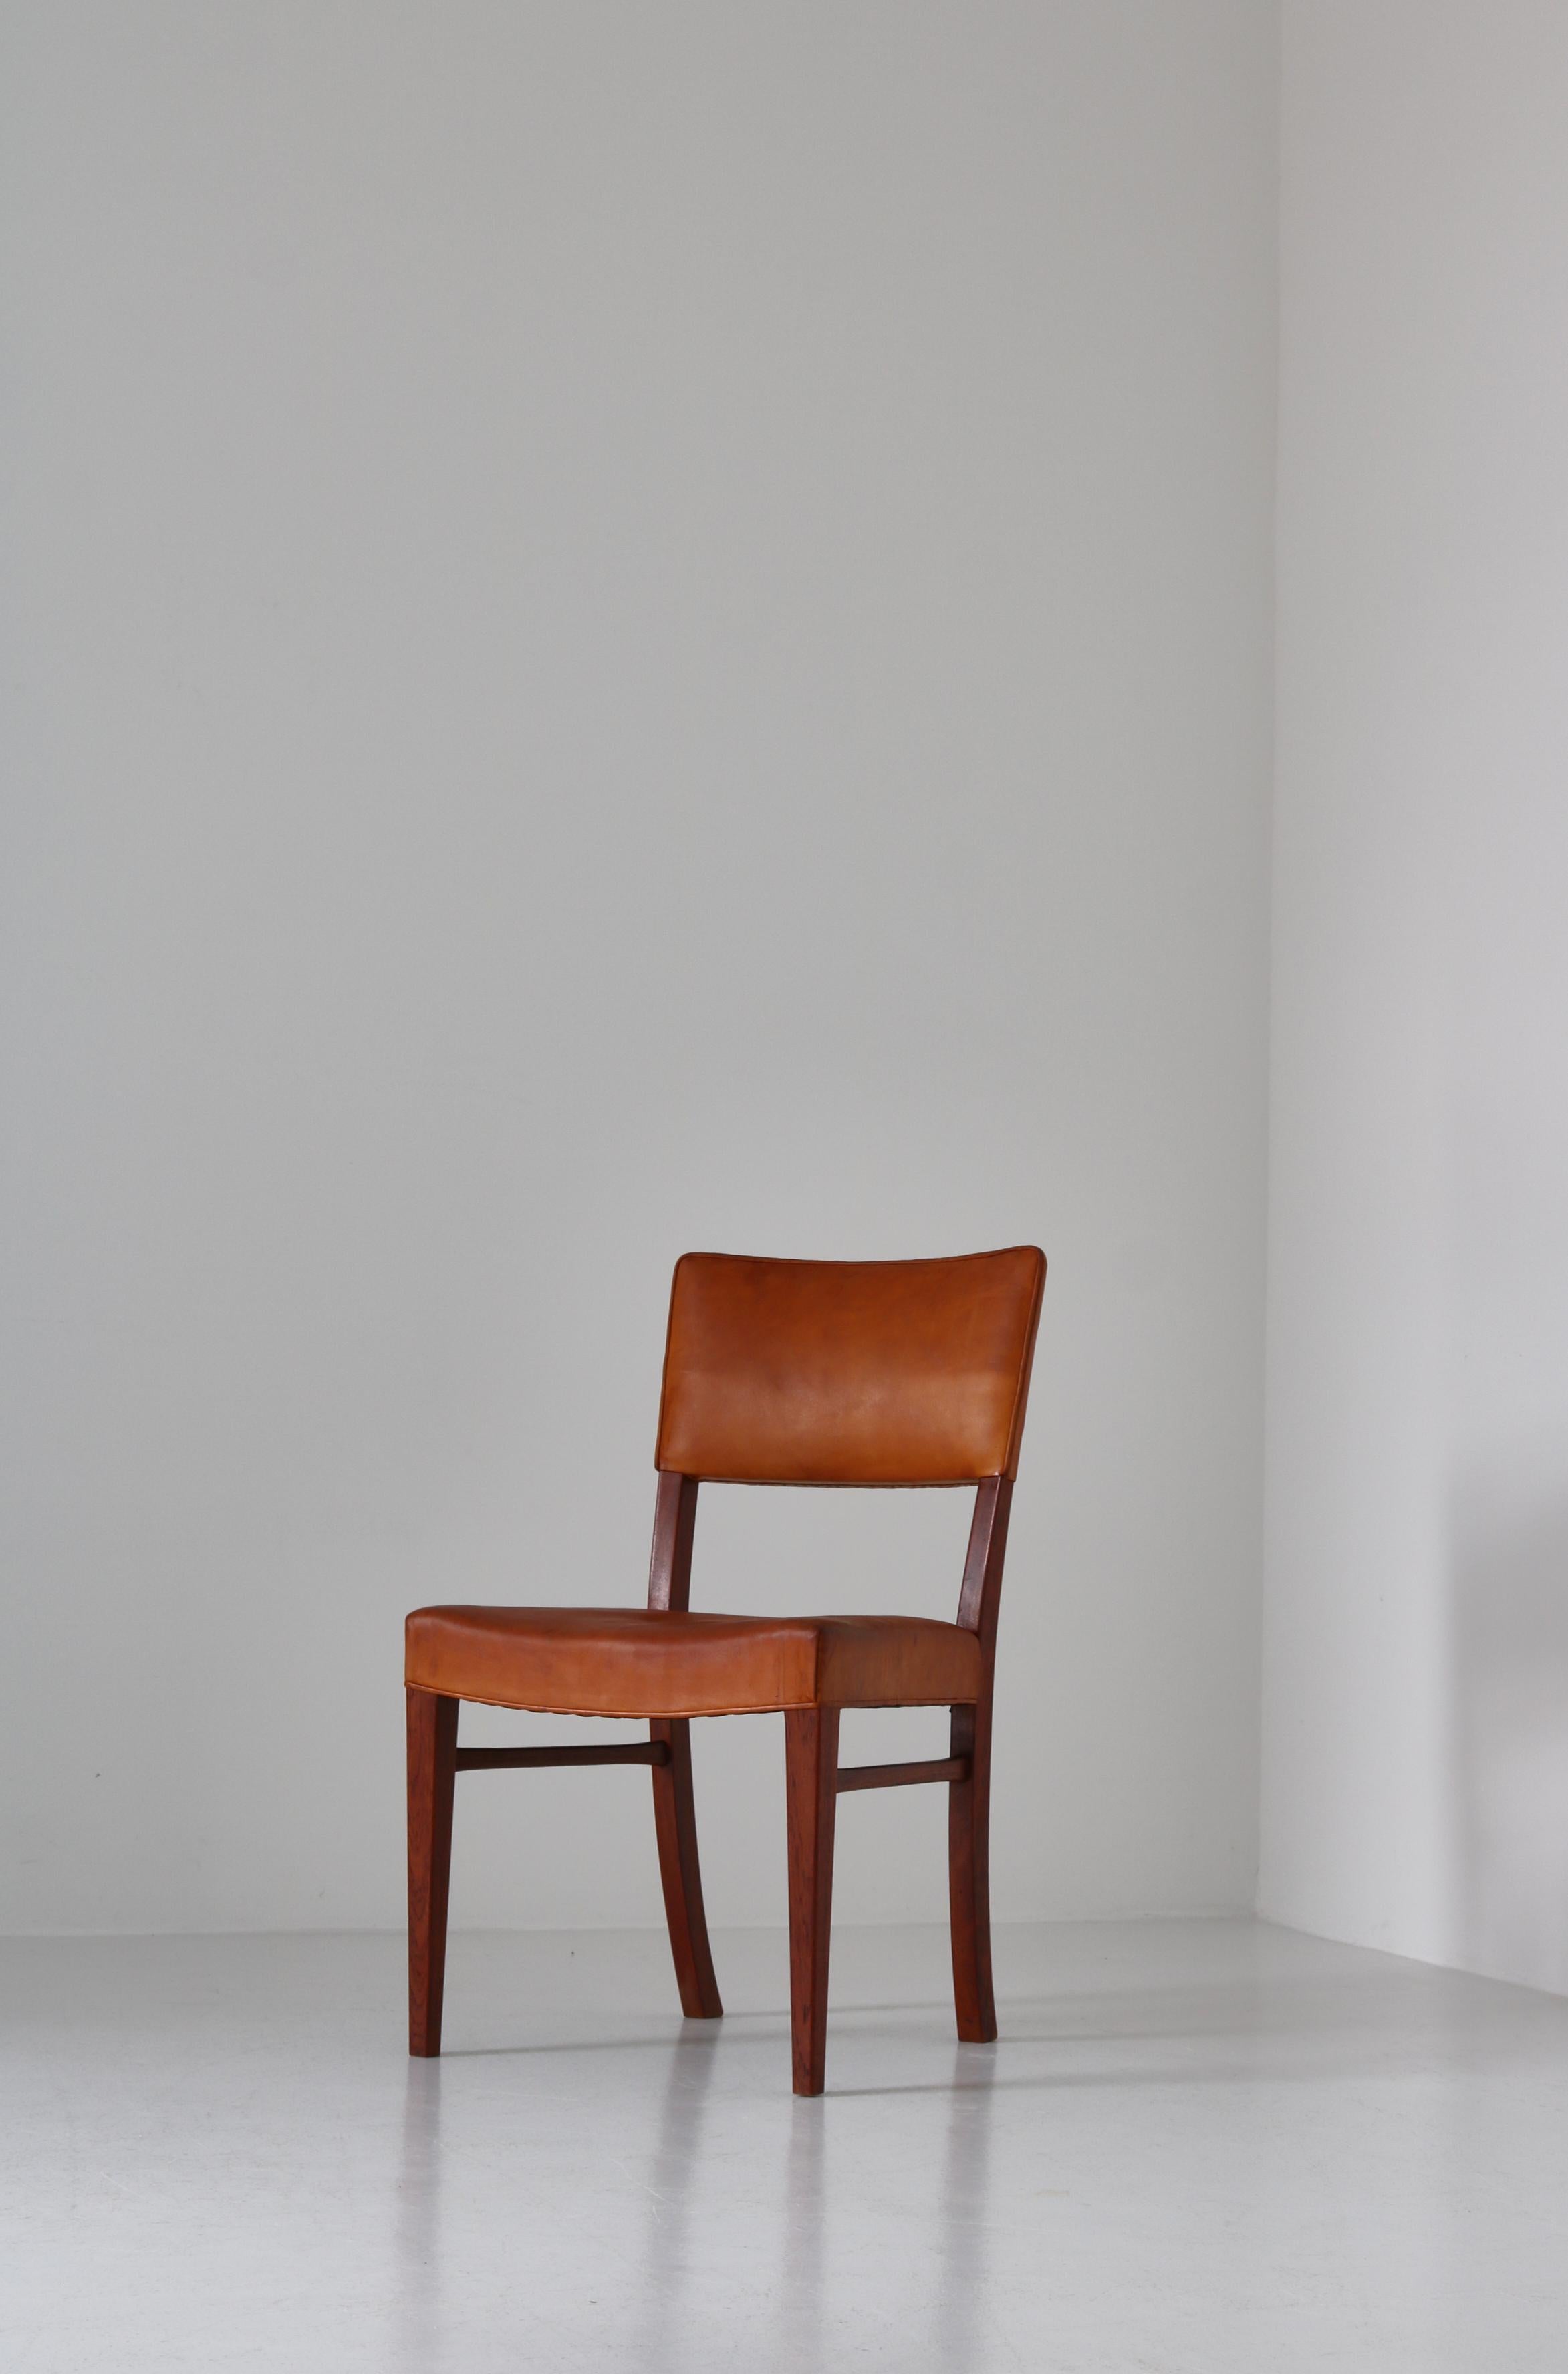 Scandinavian Modern Ernst Kühn Dining Chairs in Leather and Teak by Lysberg, Hansen & Therp, 1940s